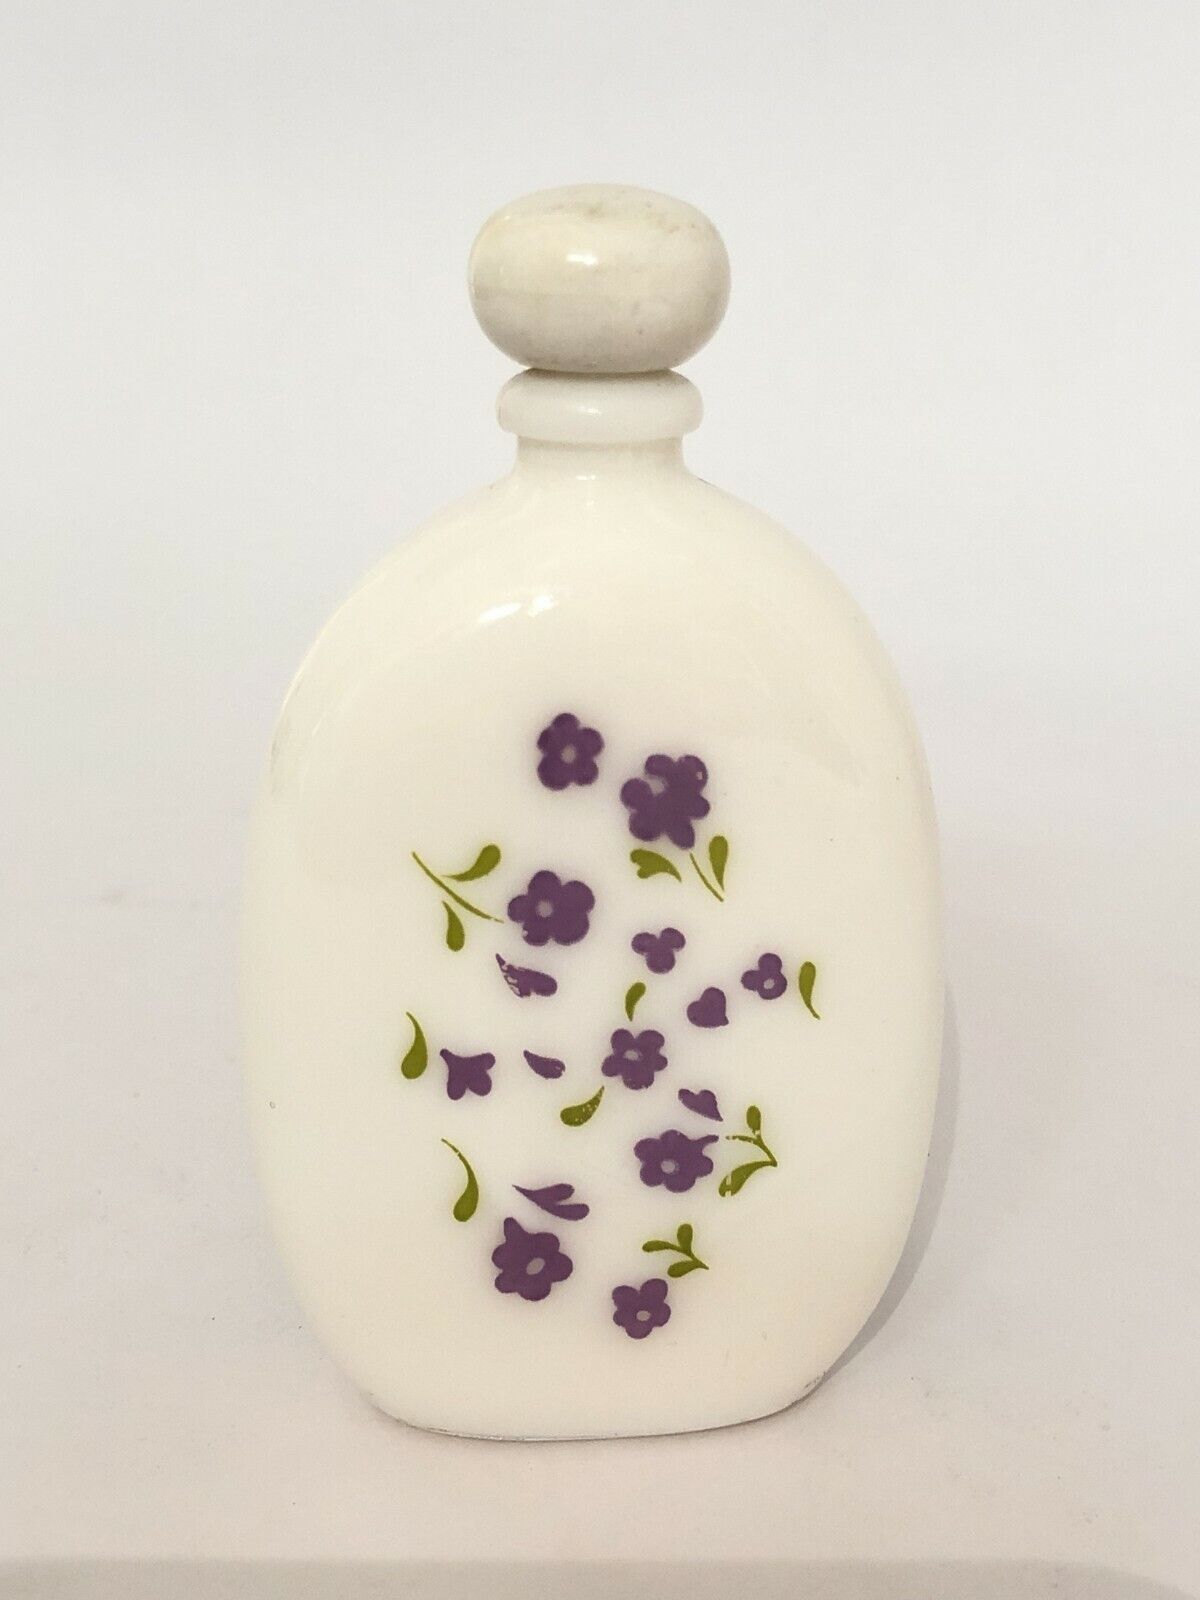 Vintage Old Milky Glass Beautiful Flower Design Avon Perfume Bottle. G14-141 